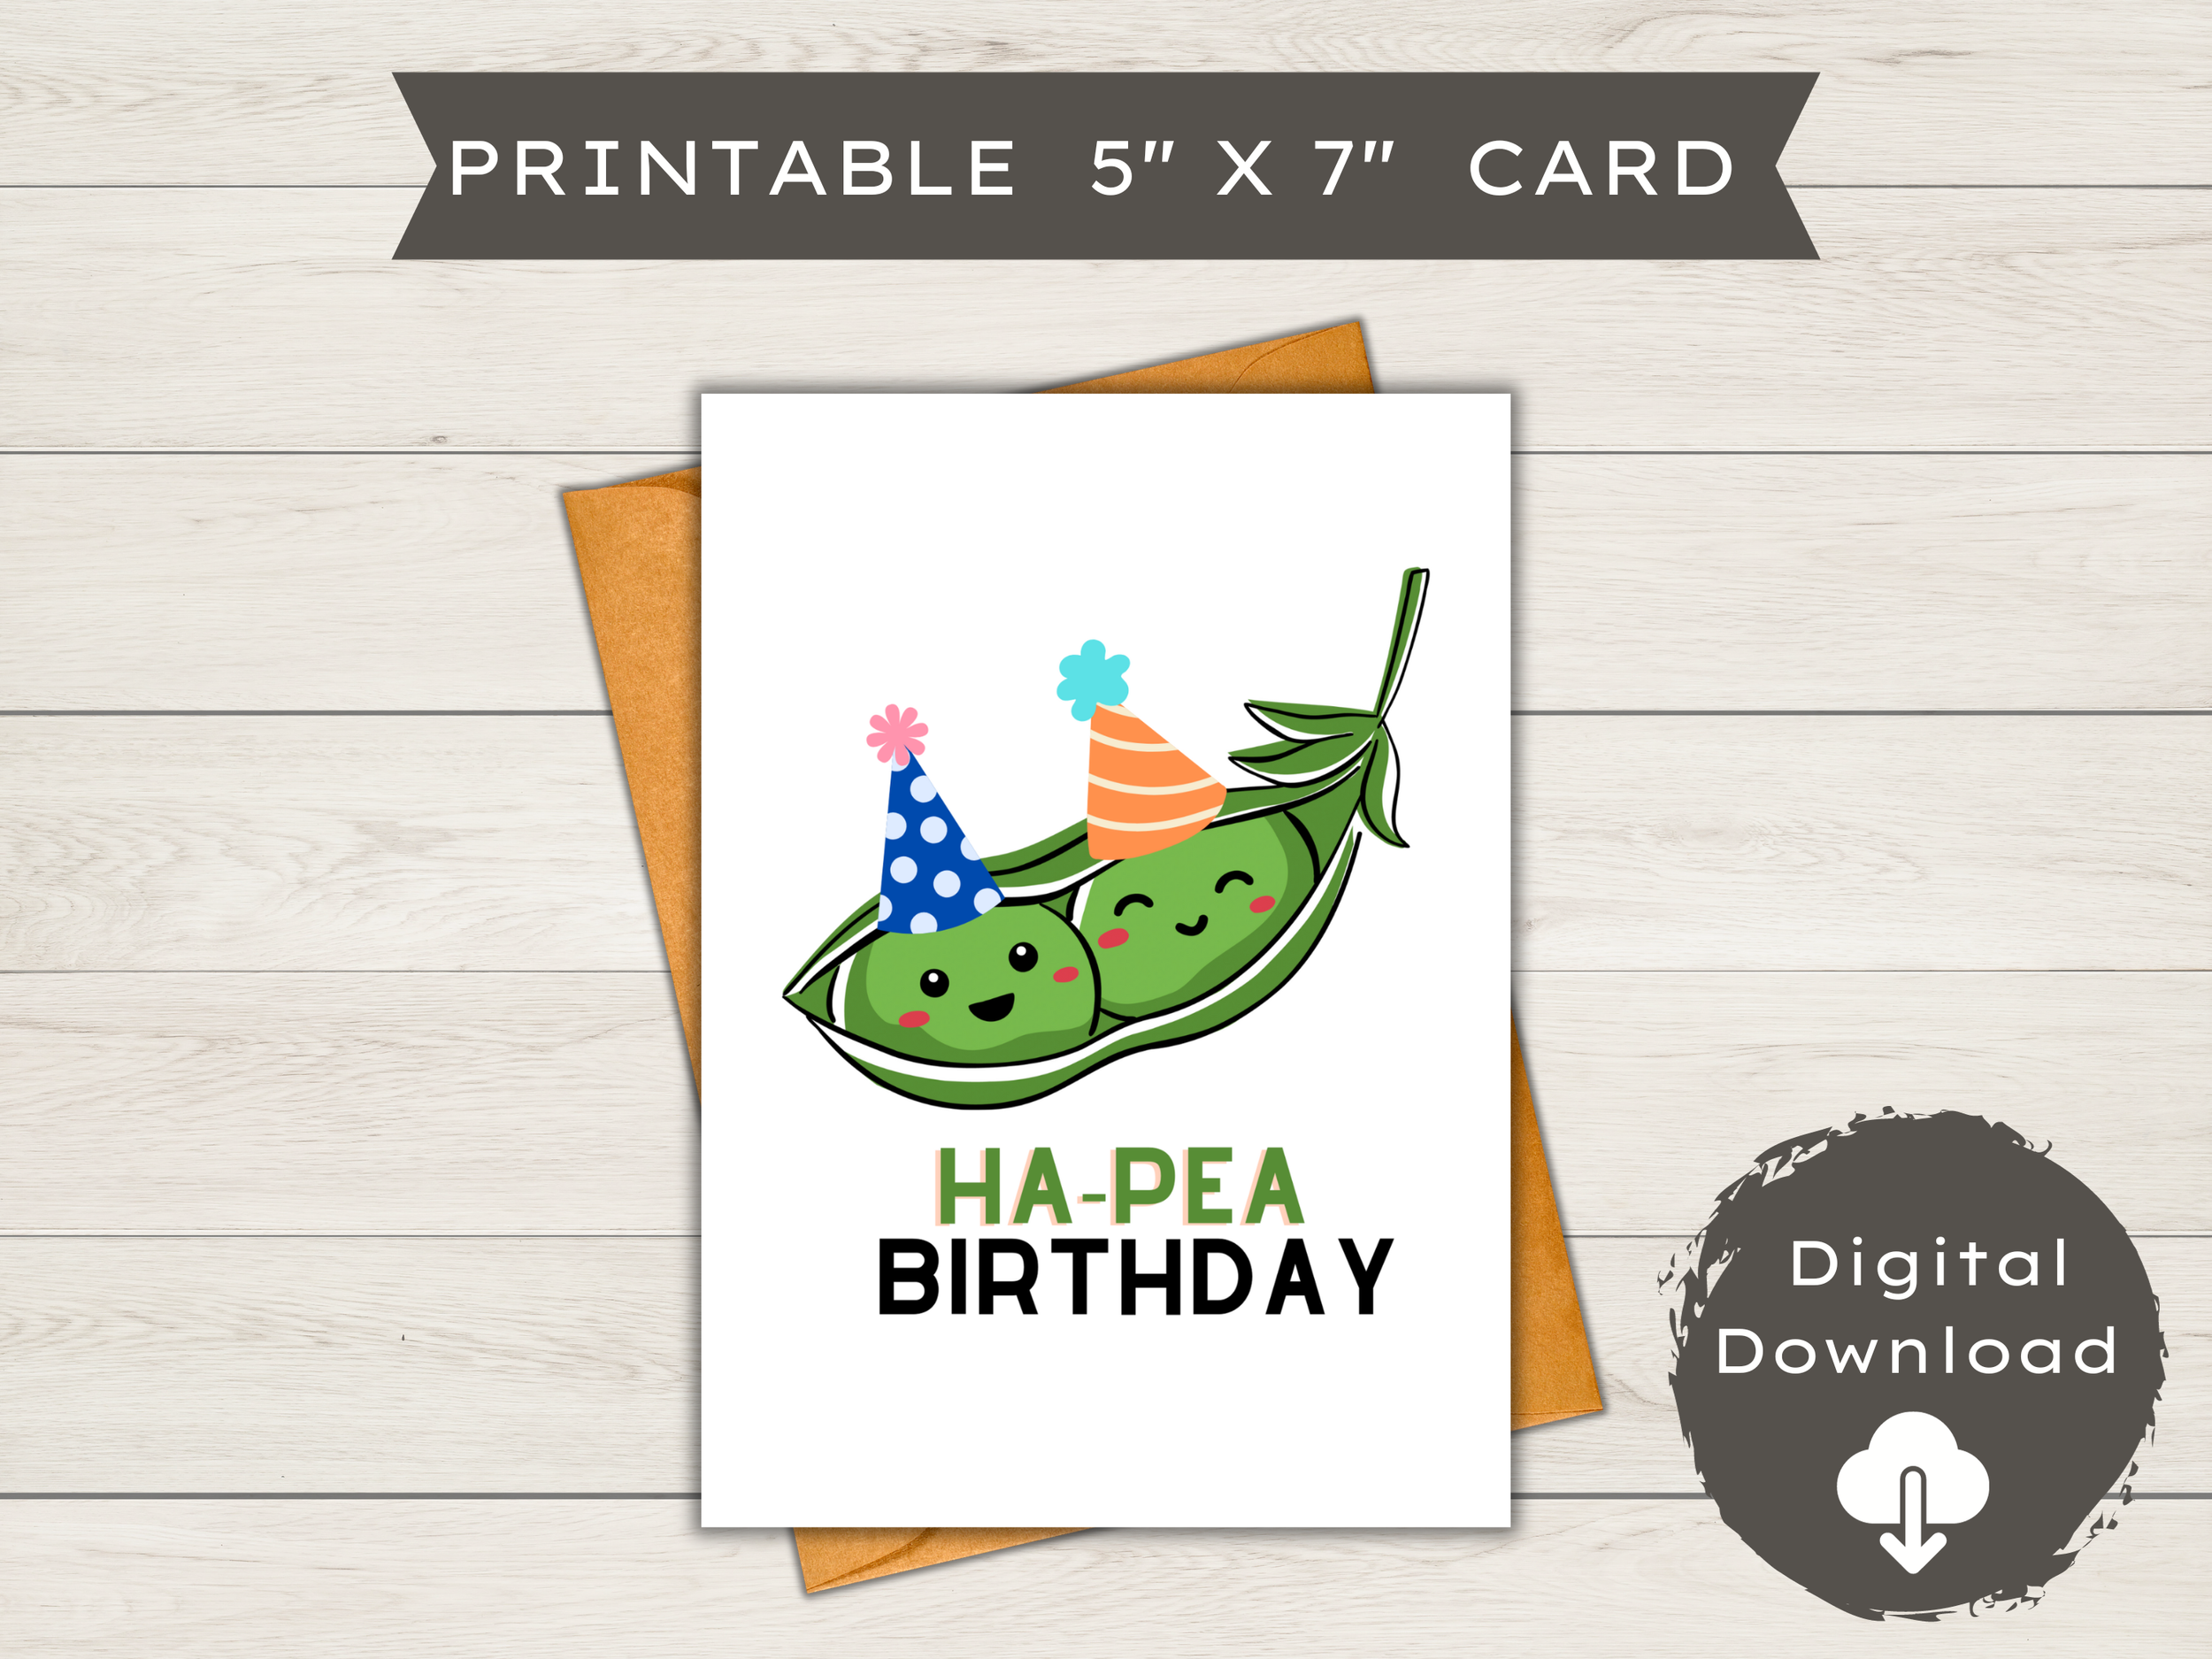 Printable Birthday Card - Ha-pea Birthday!